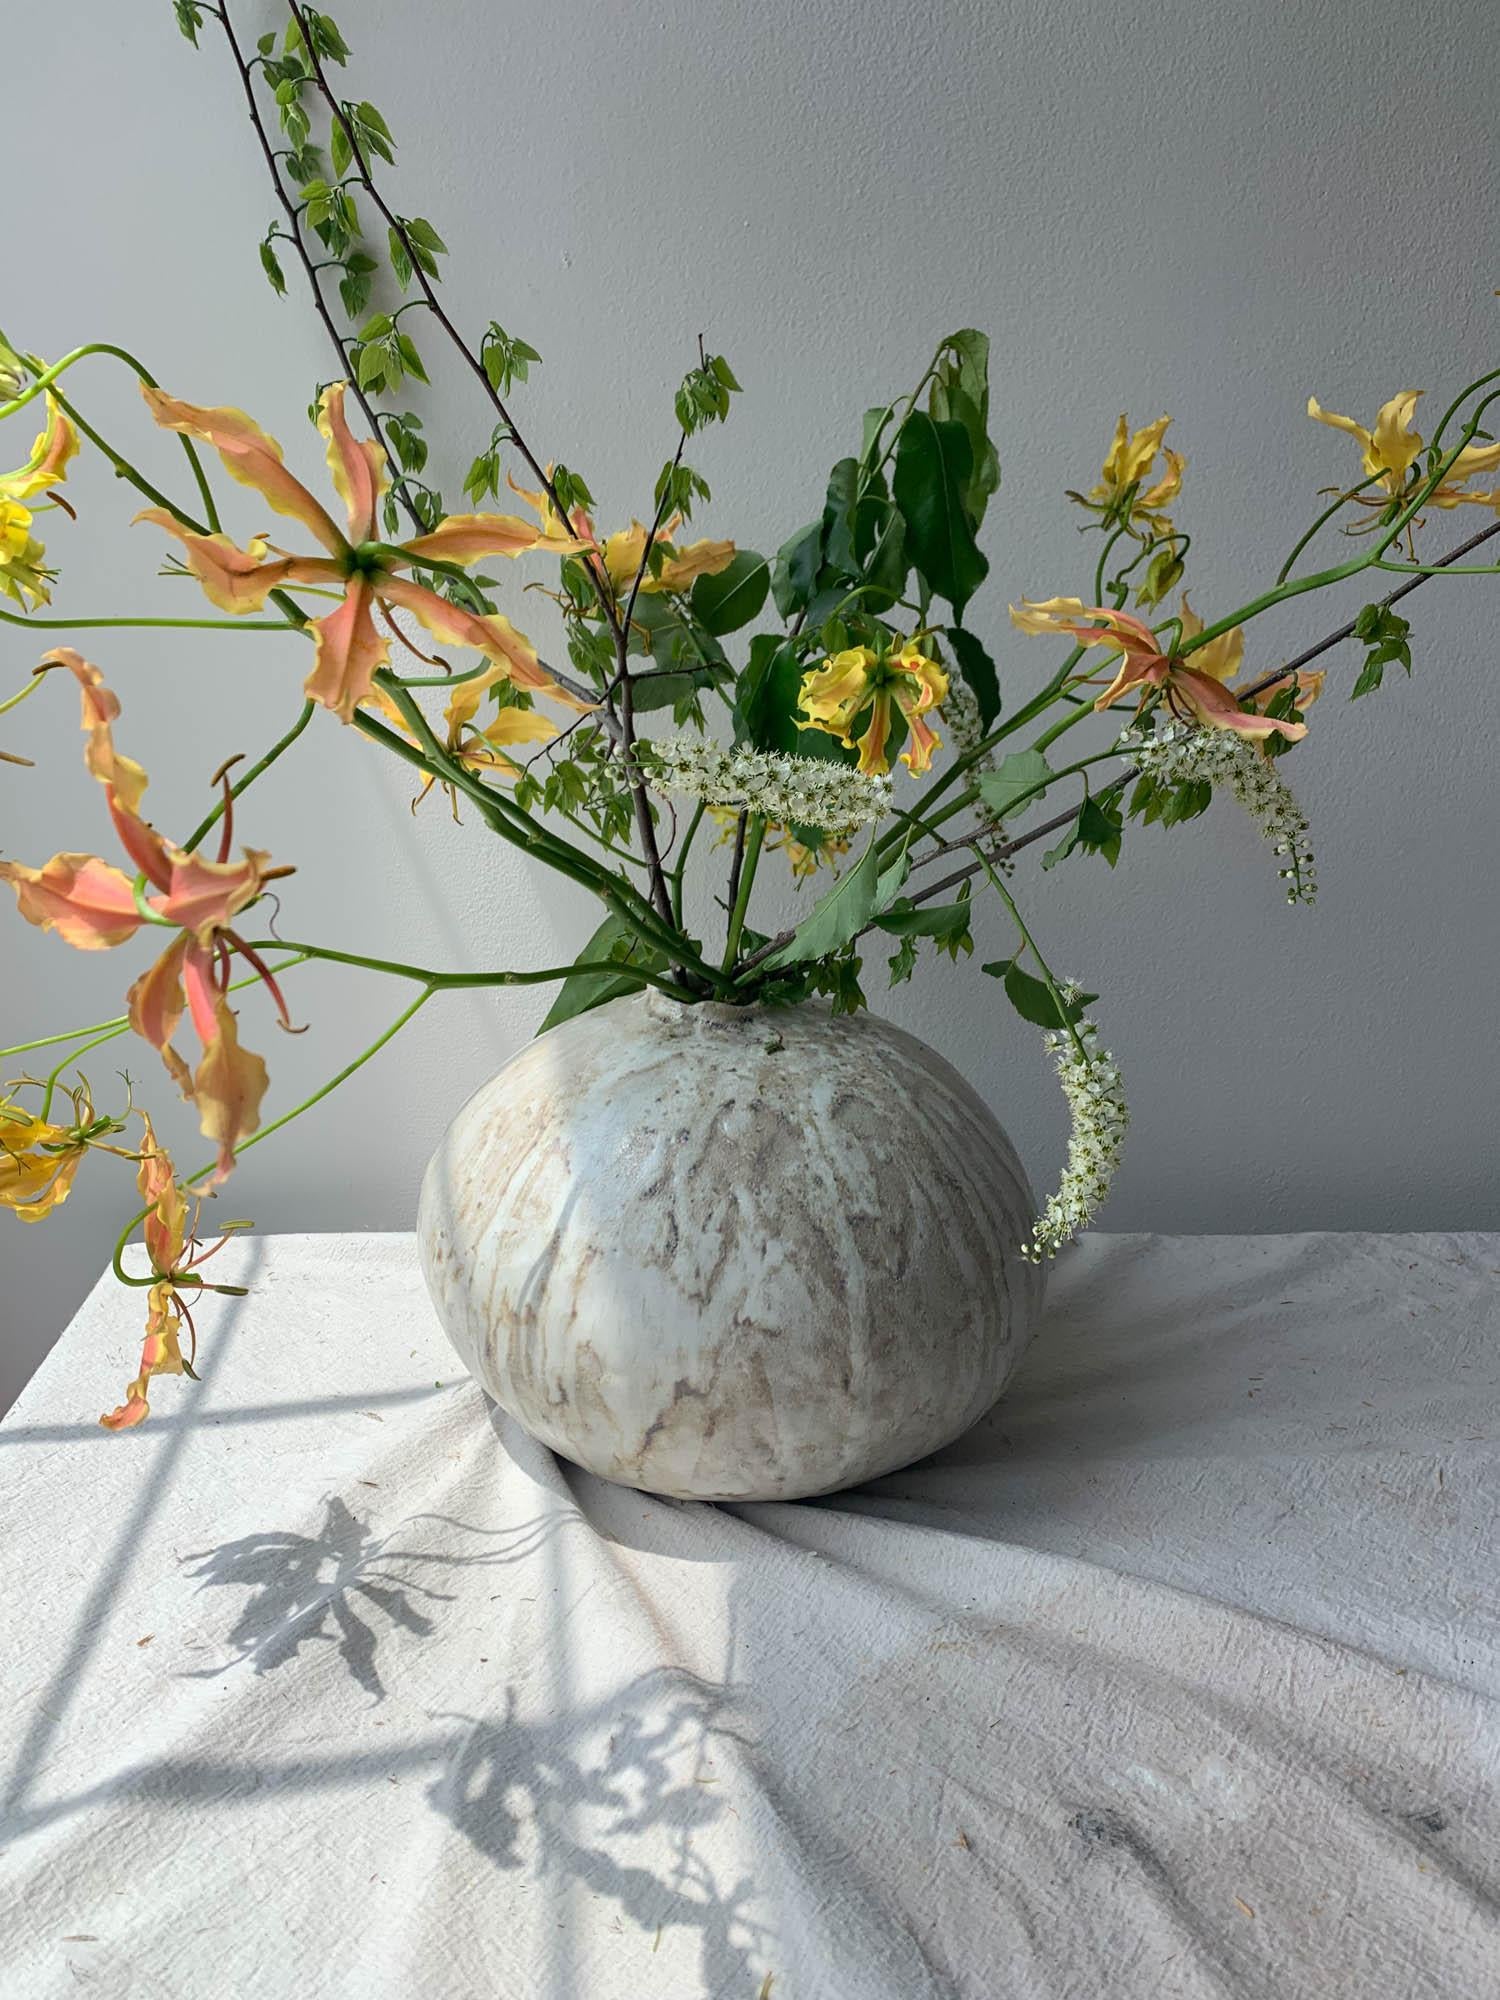 American Handbuilt Organic Modern Large Ceramic Moon Vase with Lava Glaze For Sale